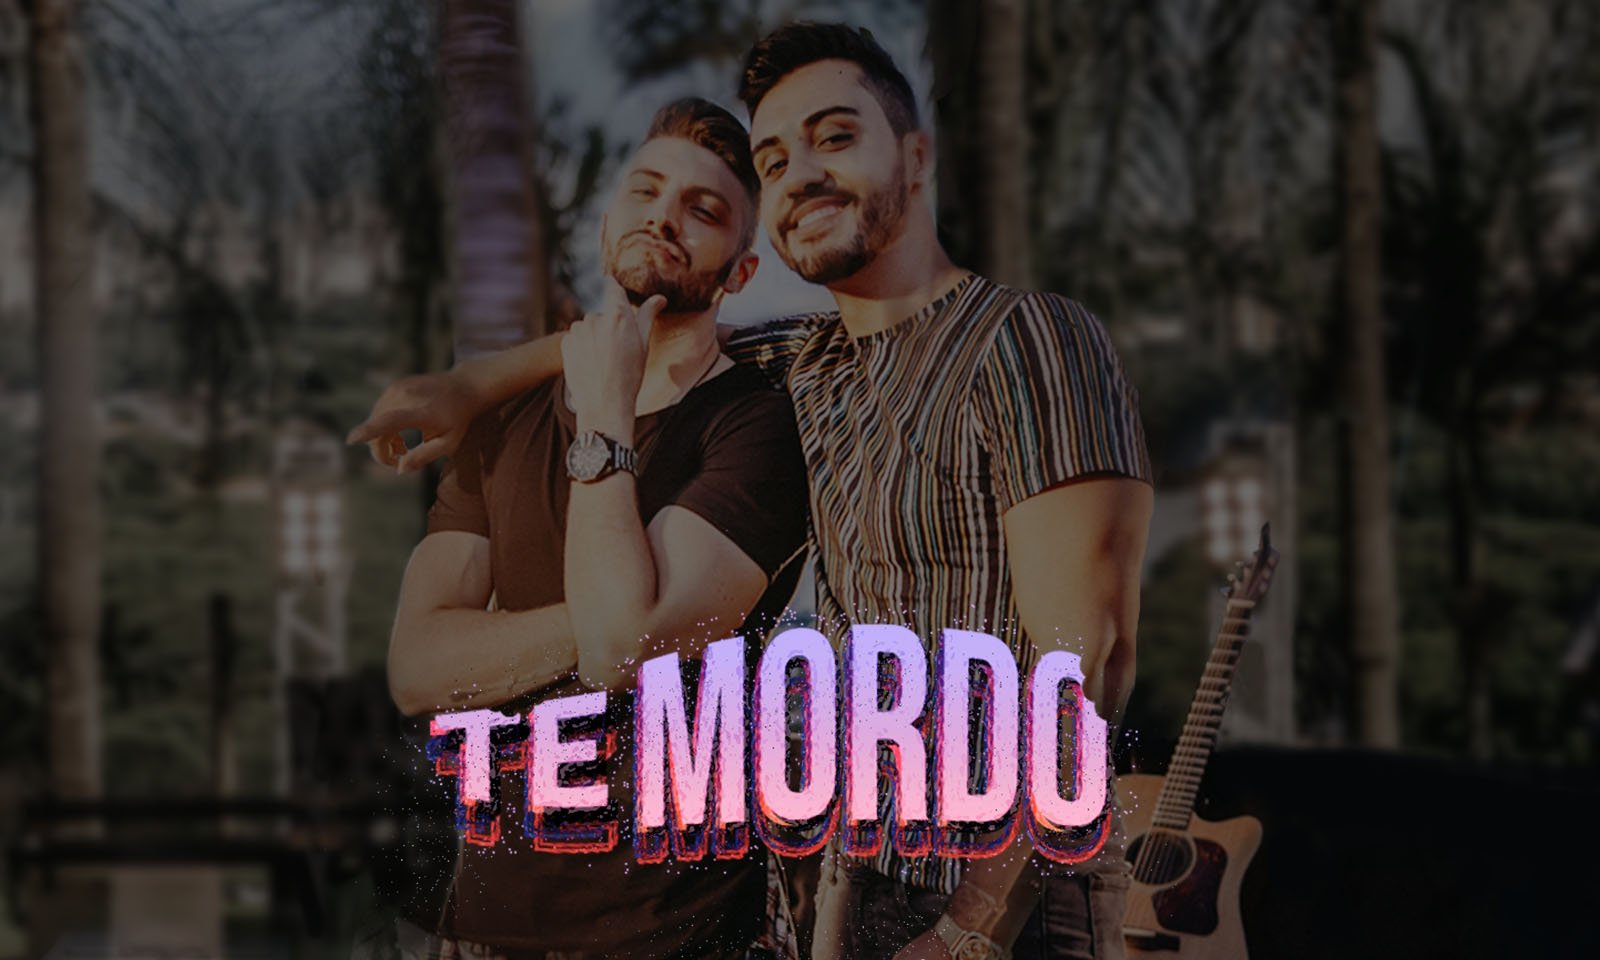 Leandro e Romani lançam o clipe de "Te Mordo"